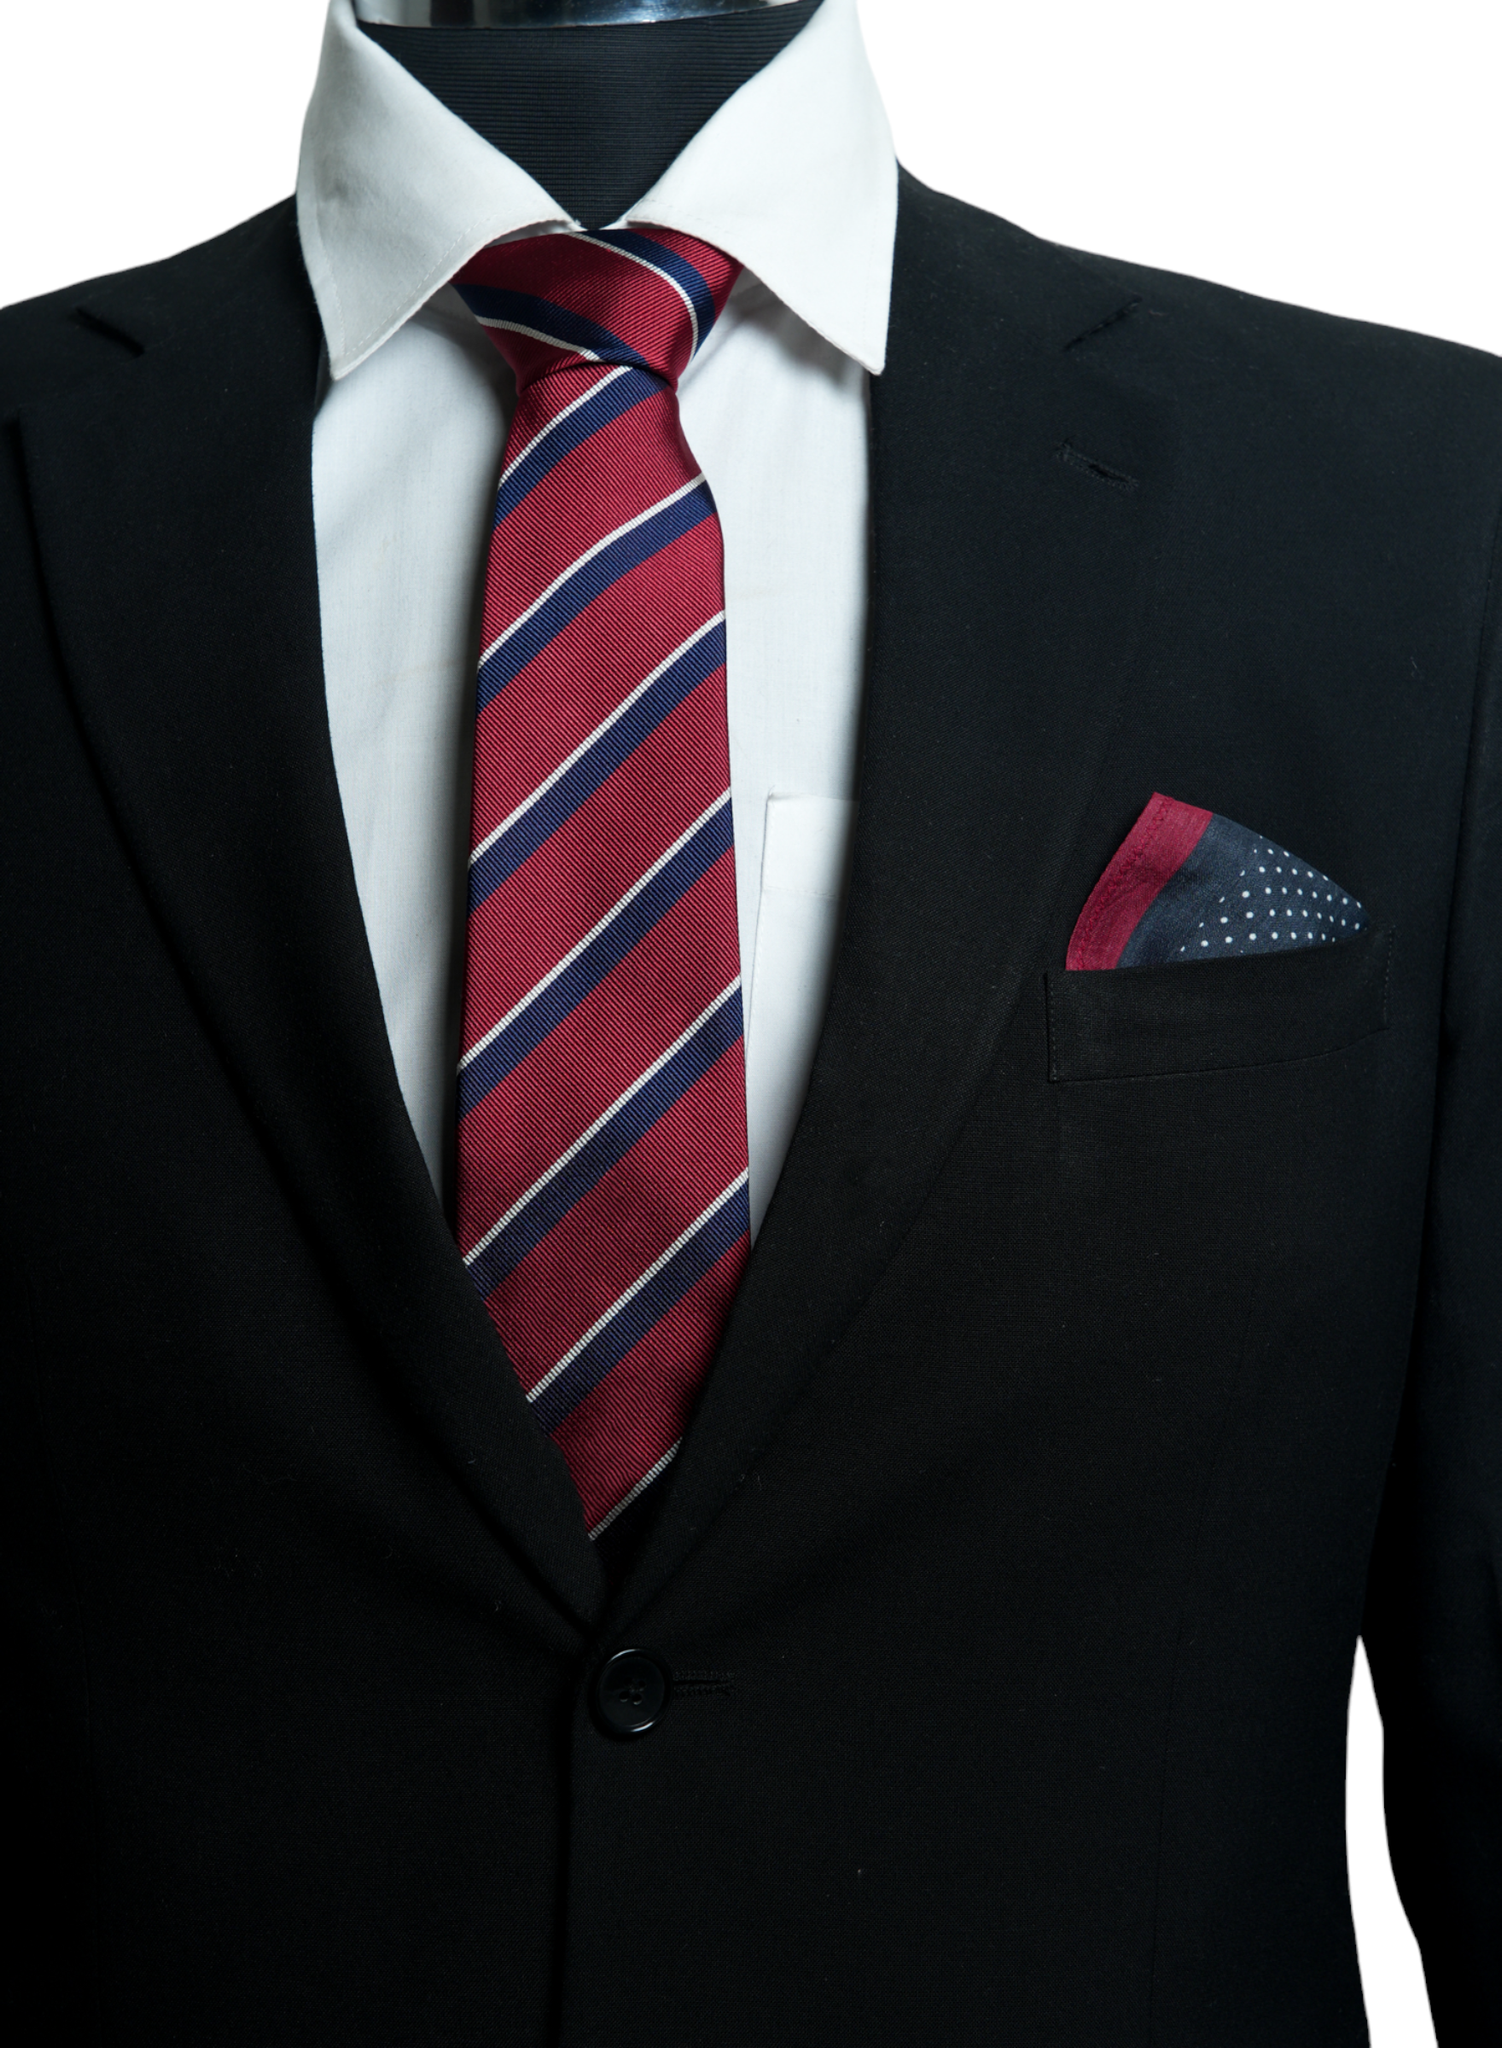 Chokore Spot On - Pocket Square & Chokore Repp Tie (Red) Necktie